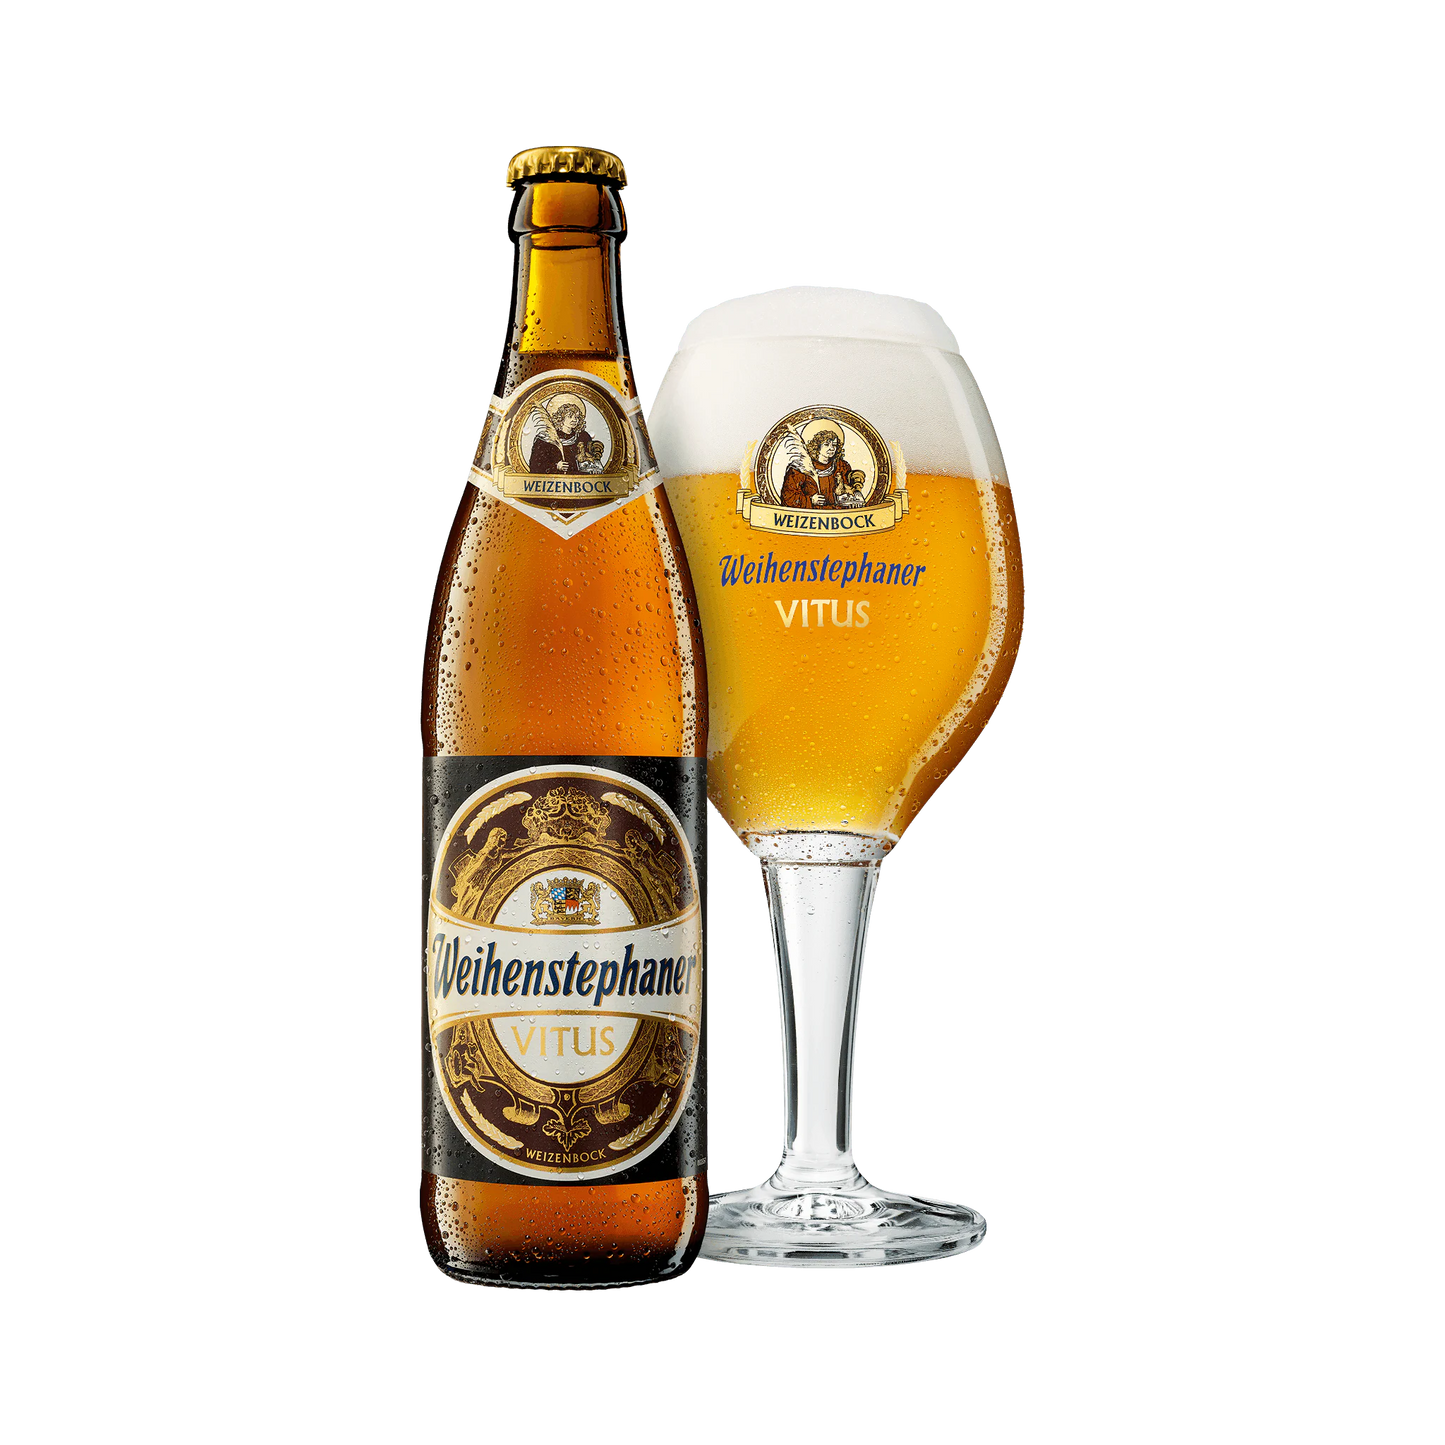 Weihenstephaner Vitus Bock Wheat Beer 7.7% 500ml.